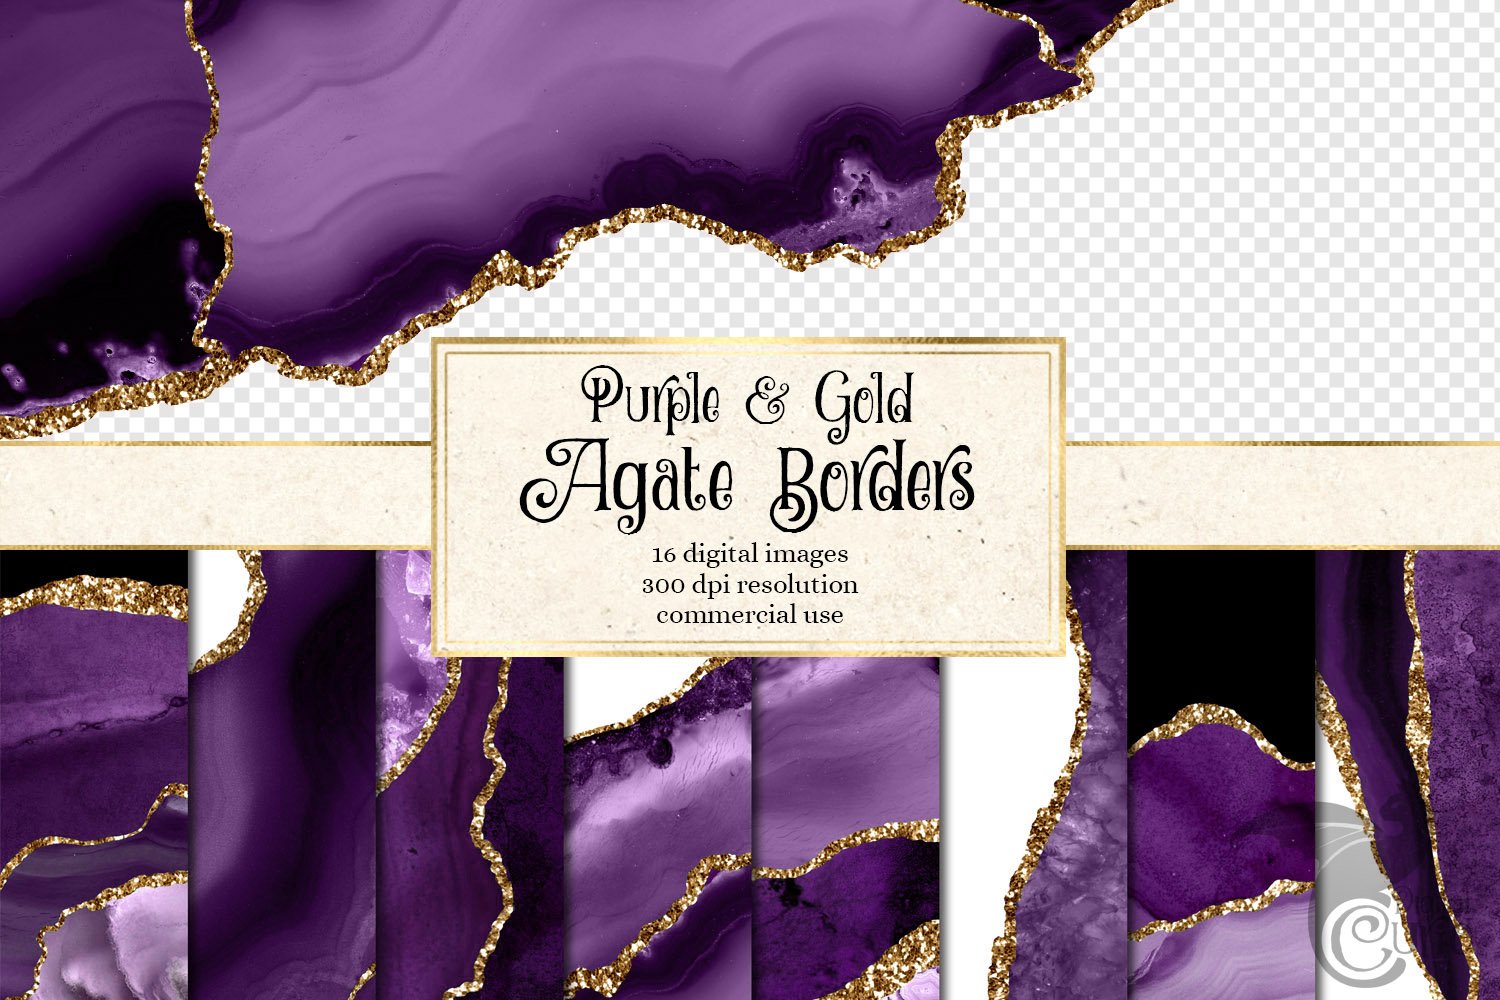 Purple & Gold Agate Borders cover image.